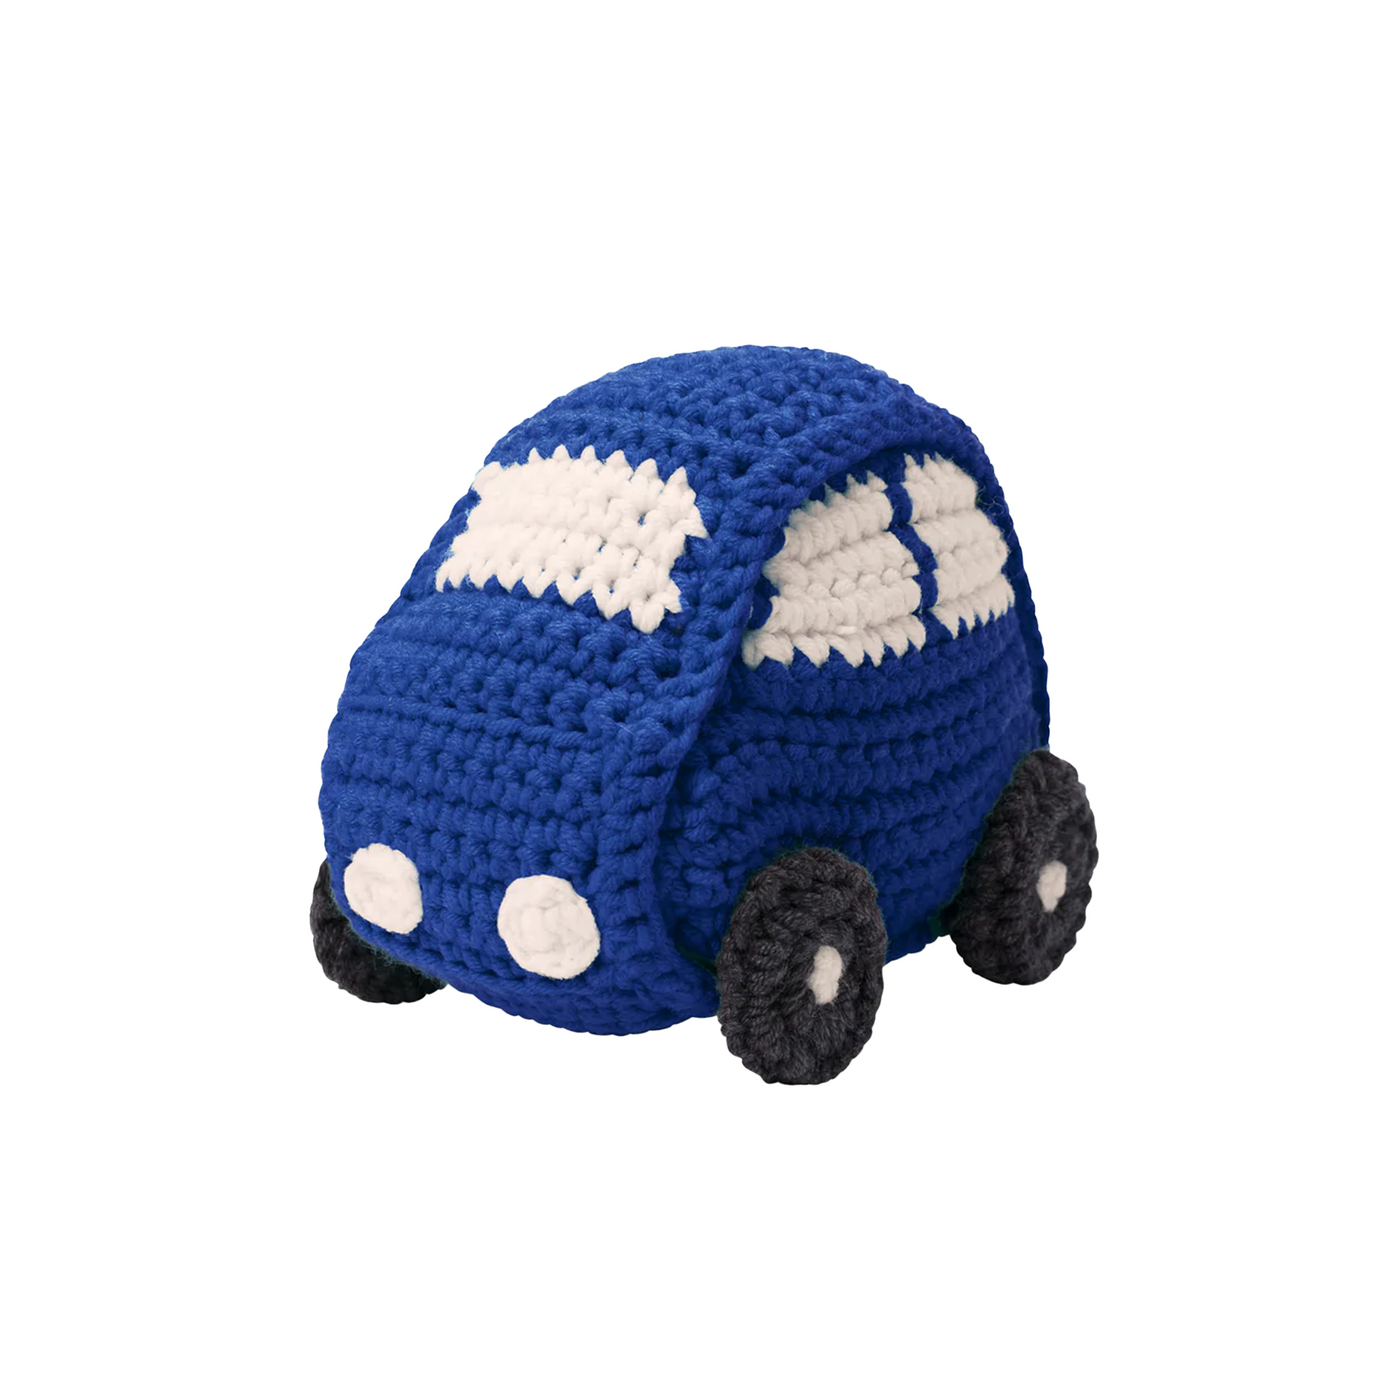 Handmade Toy Car - Navy Blue